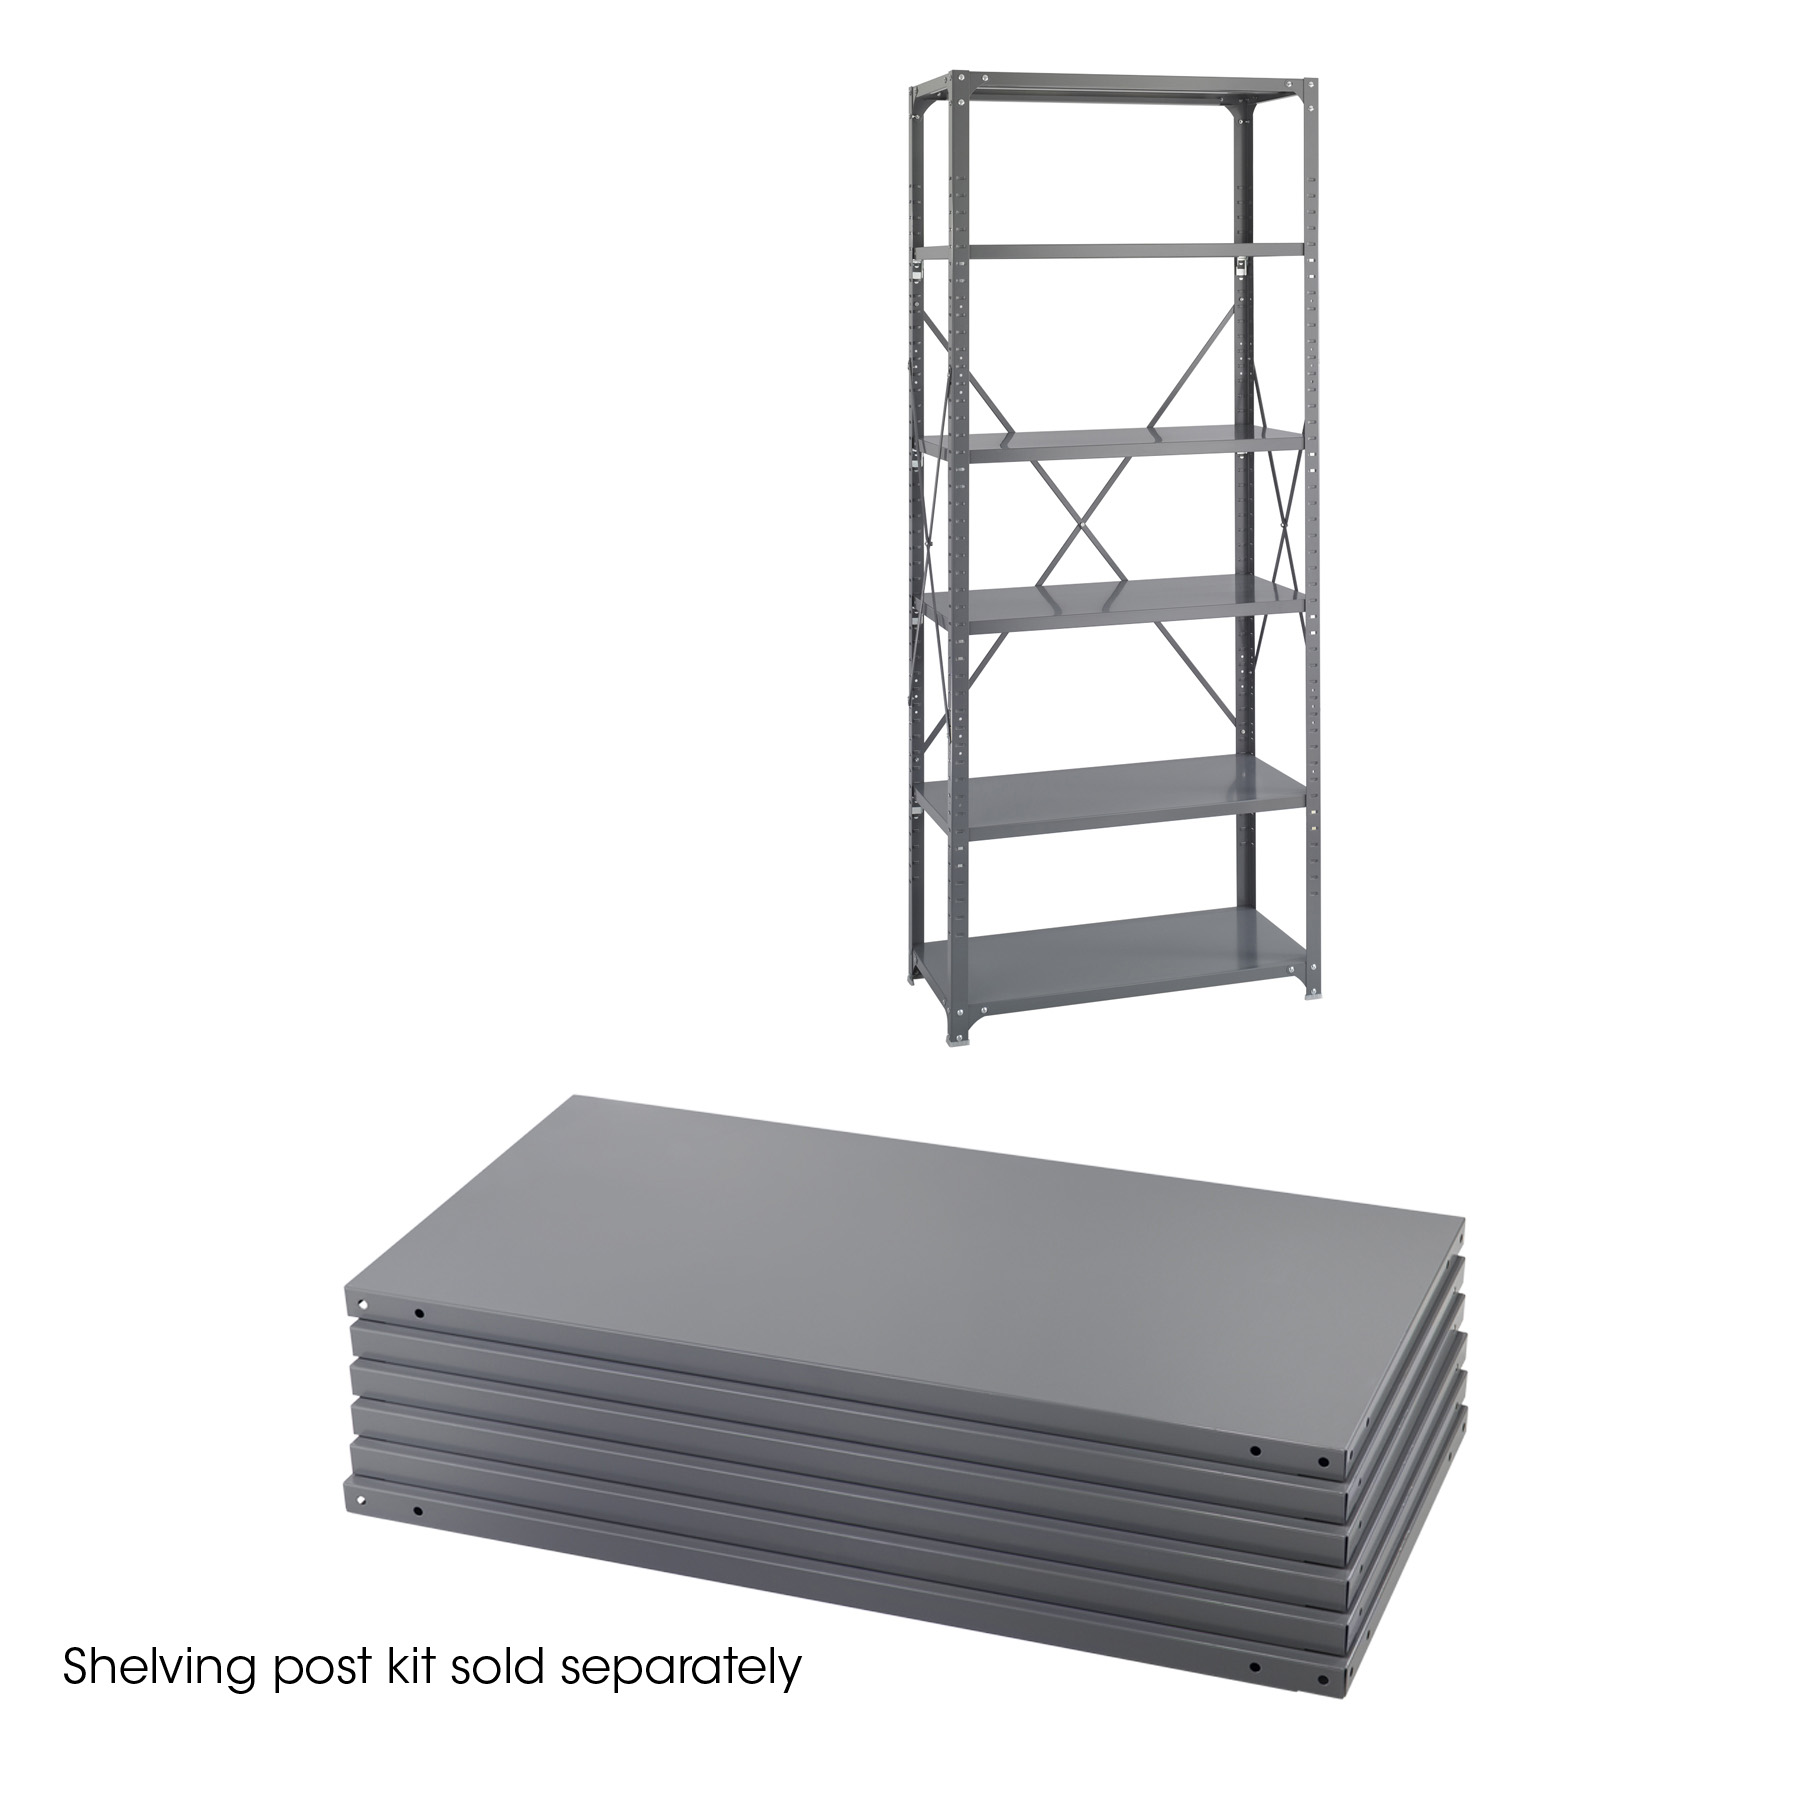 Copern Industrial 44-inch Metal 6-Bin Storage Shelf by Furniture